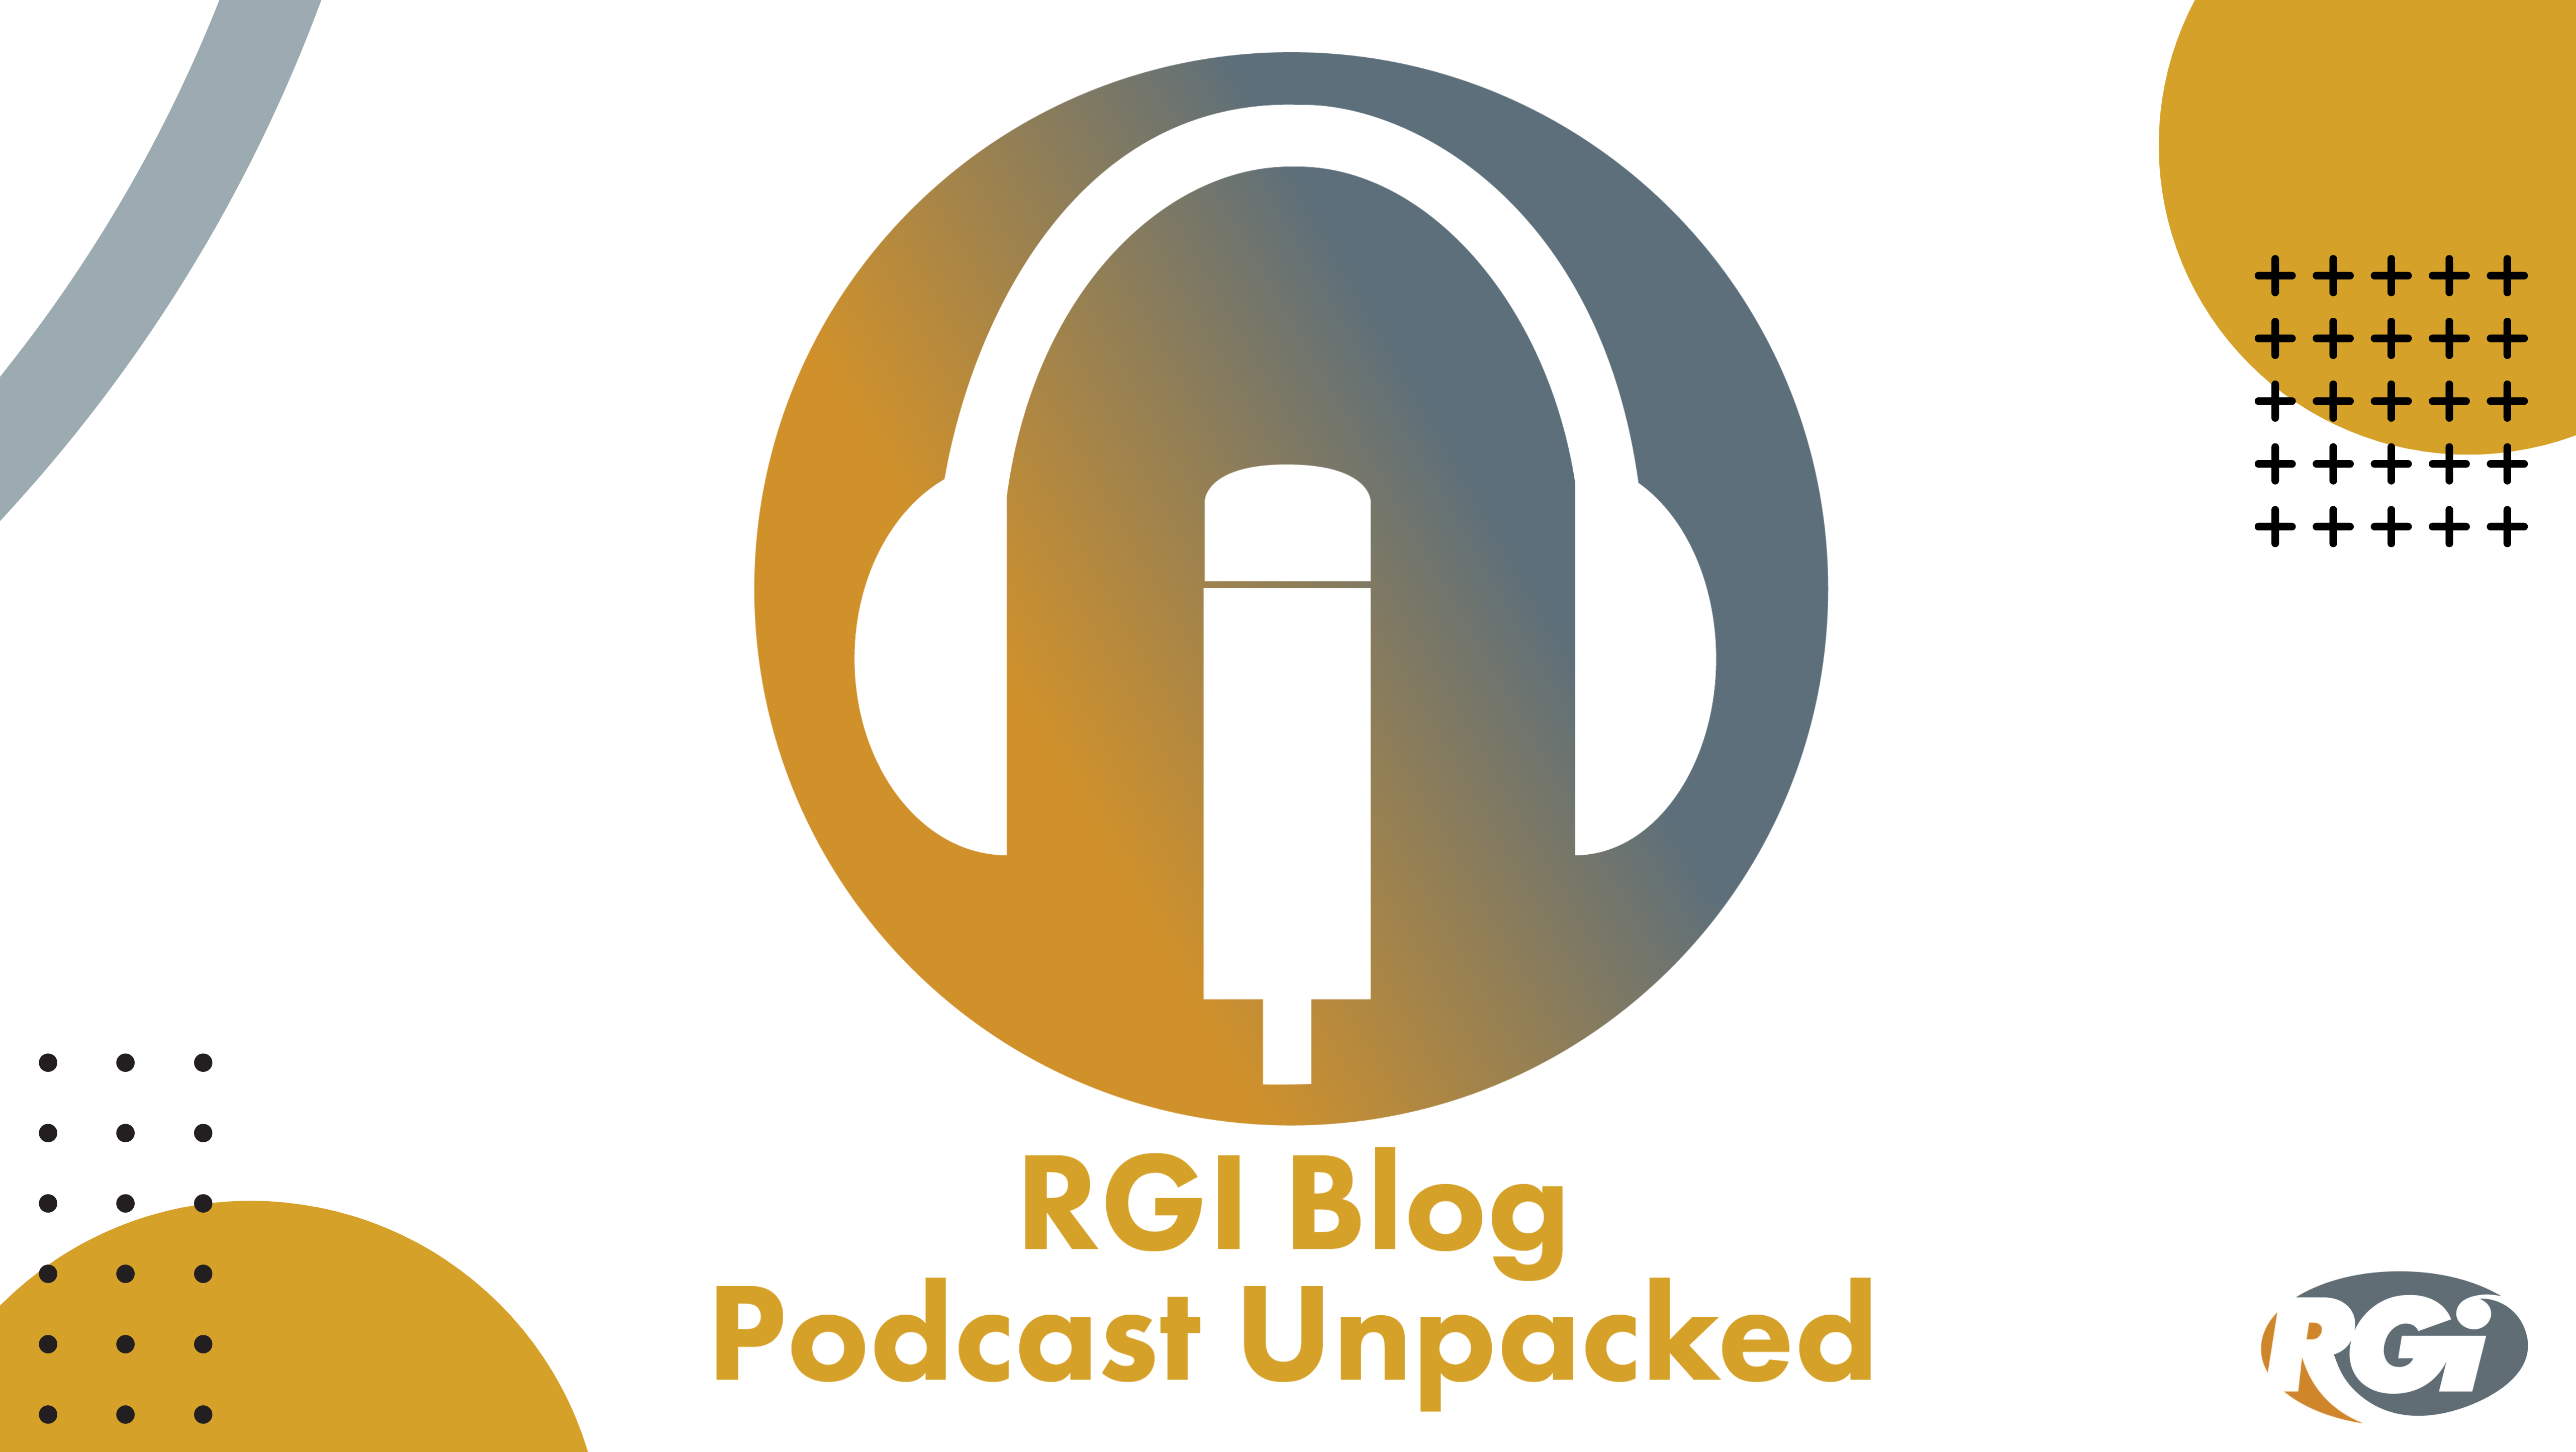 RGI Blog Podcast Unpacked logo next to Raybourn Group International (RGI). Orange circles in the corners.